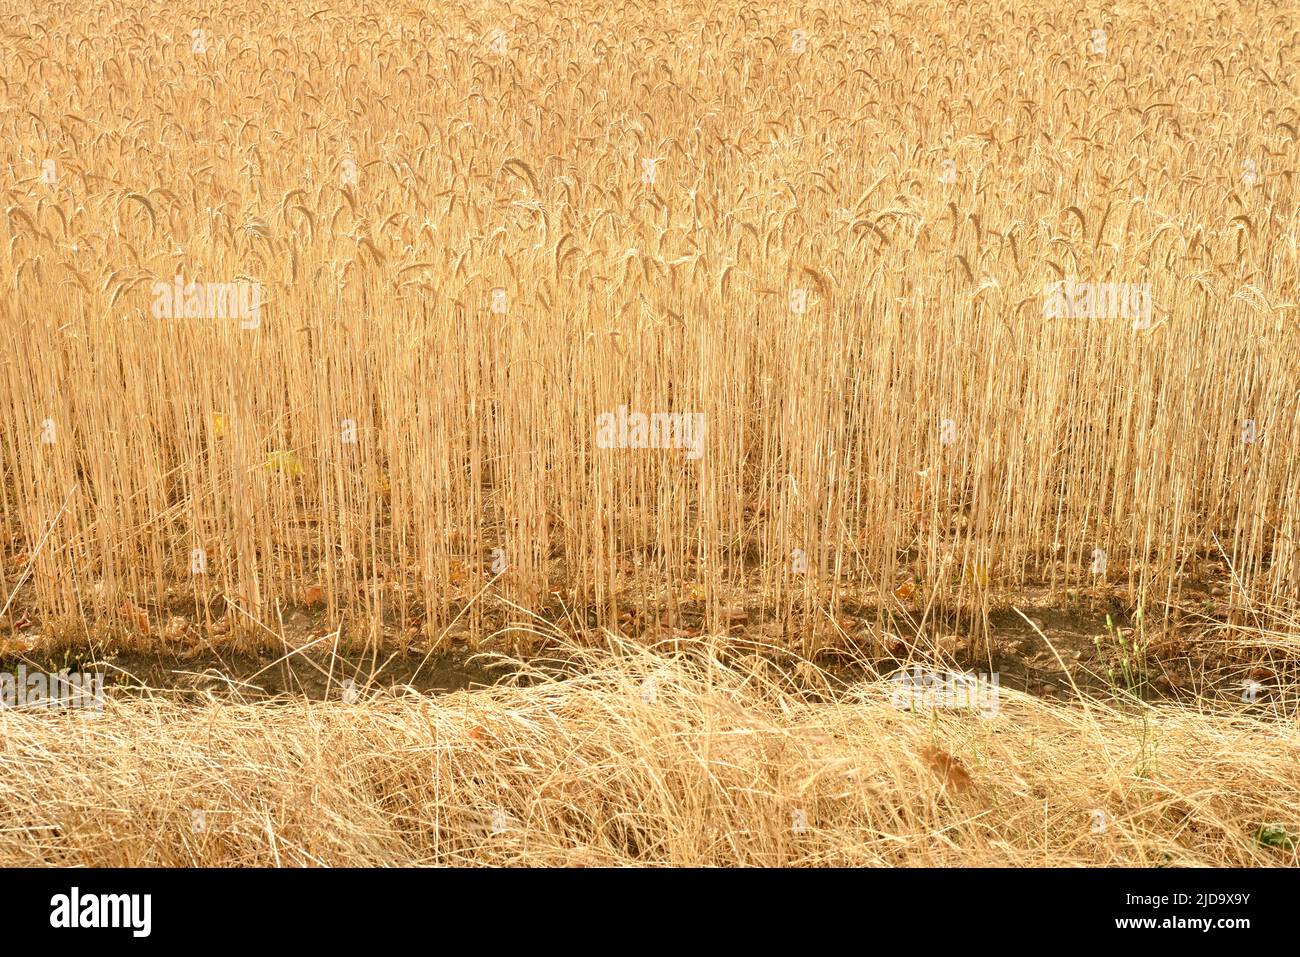 Yellow wheat field Stock Photo